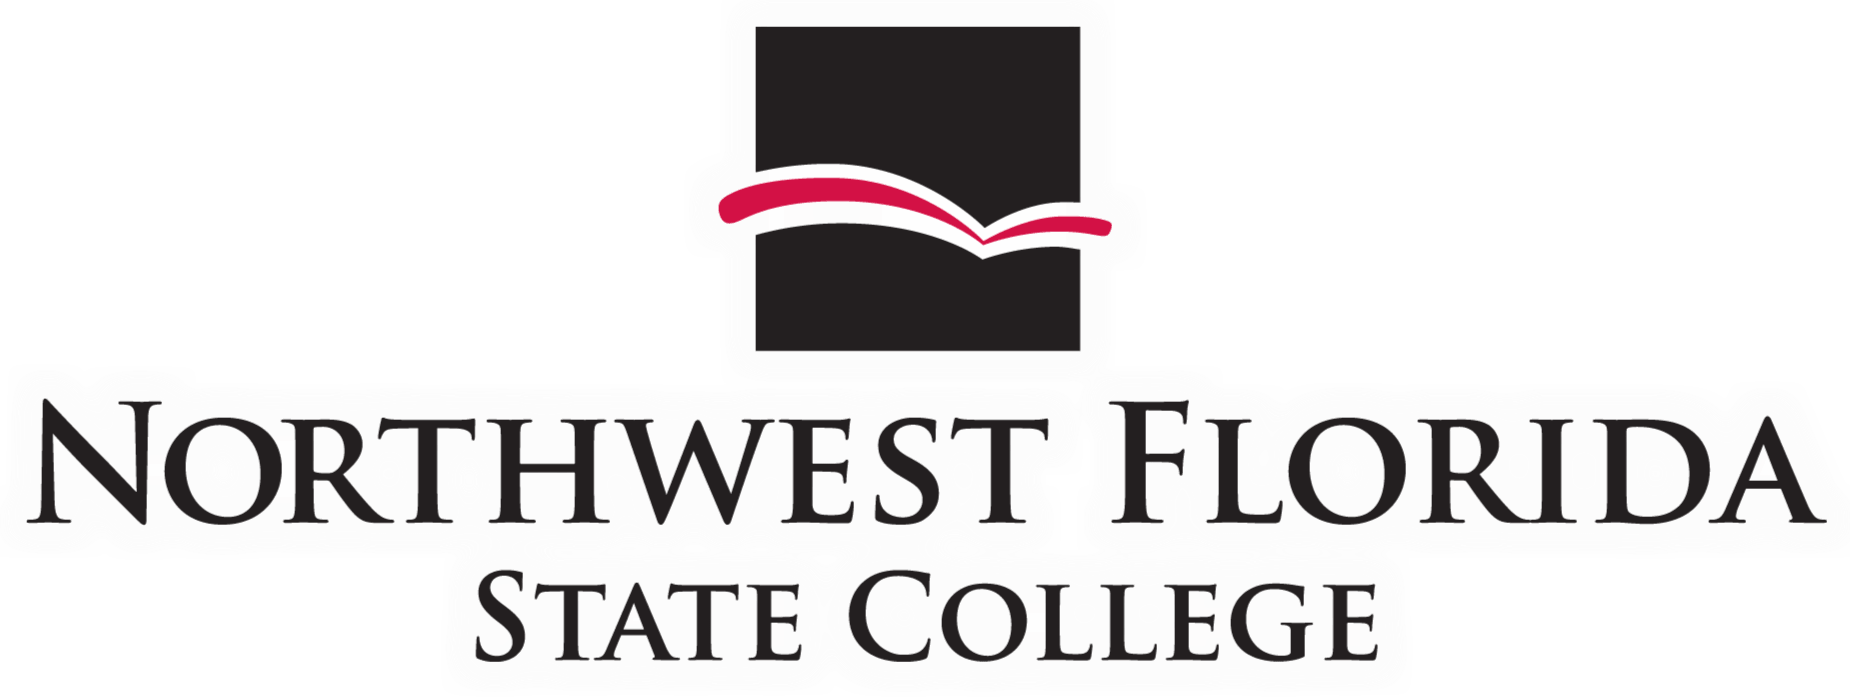 Florida State College Logo - Northwest Florida State College Technology. Academic